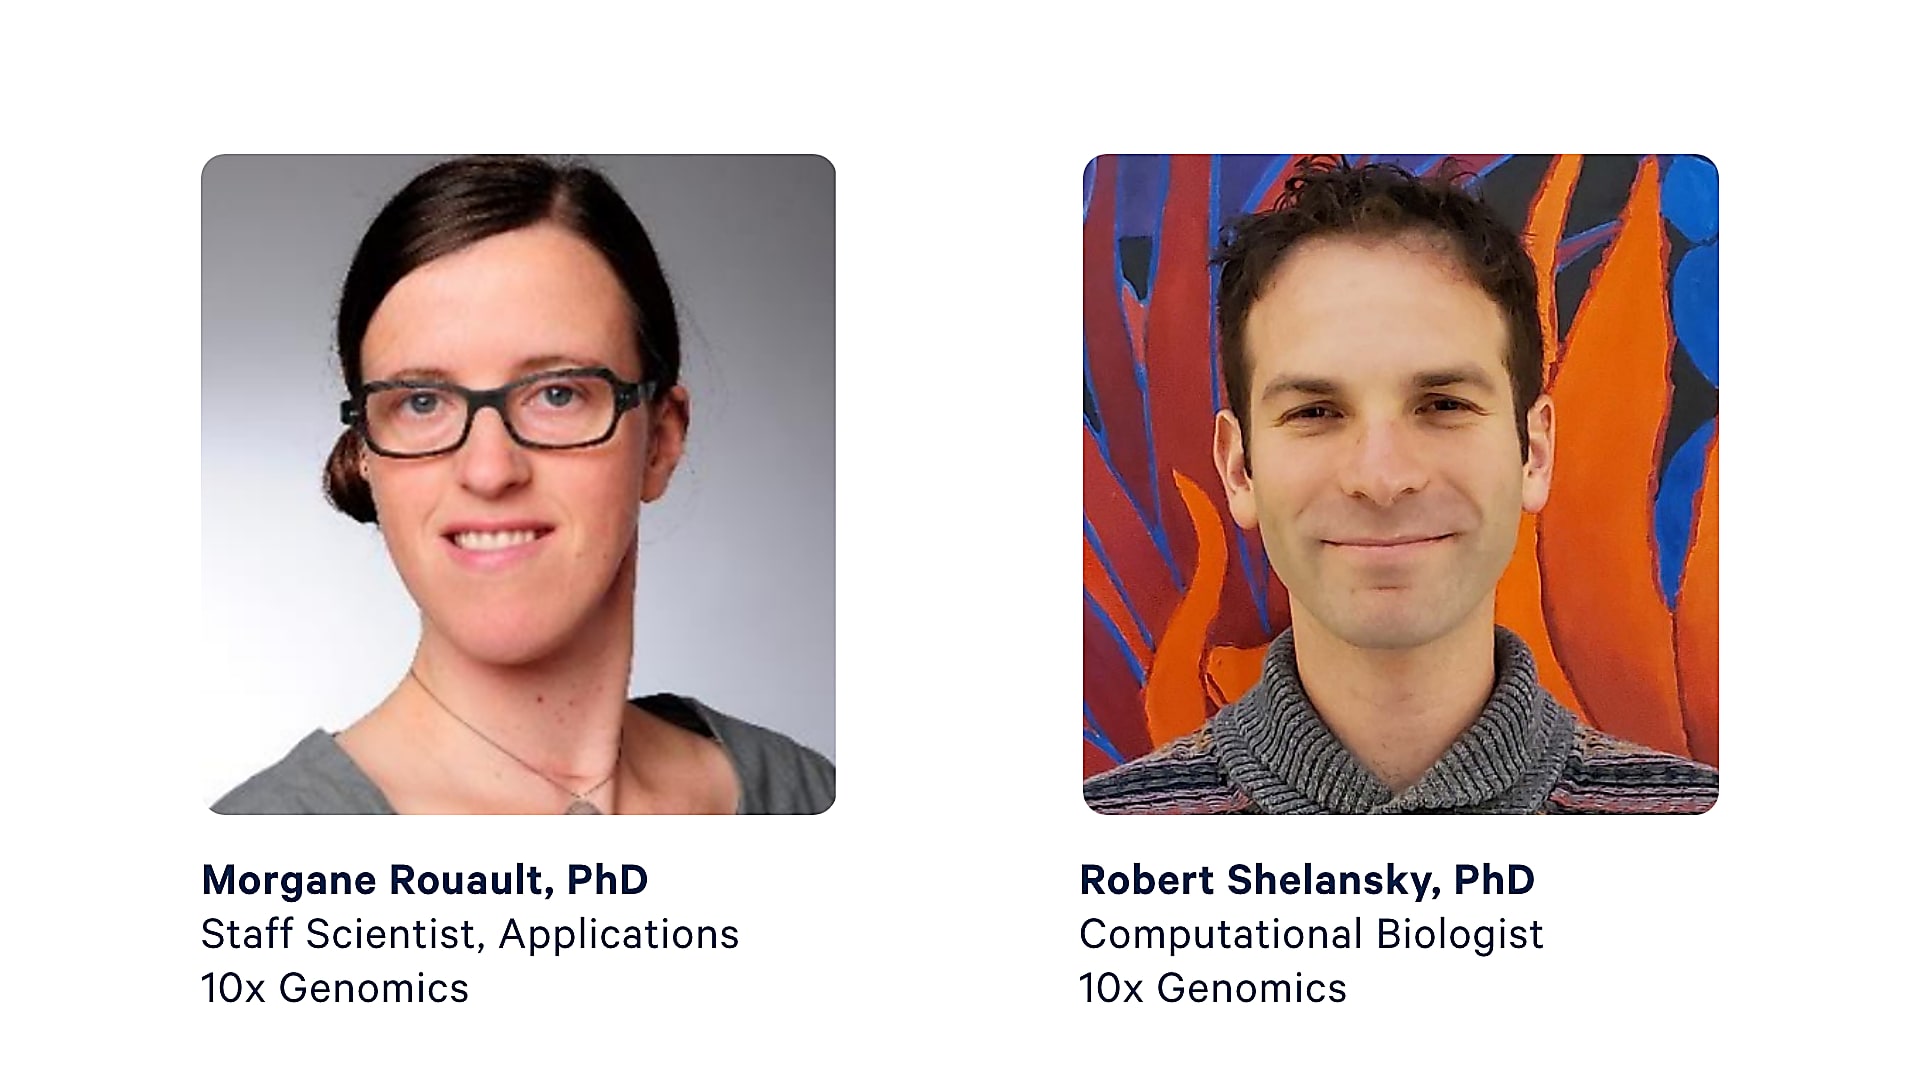 Morgane Rouault, PhD, Staff Scientist, and Robert Shelansky, PhD, Computational Biologist at 10x Genomics.